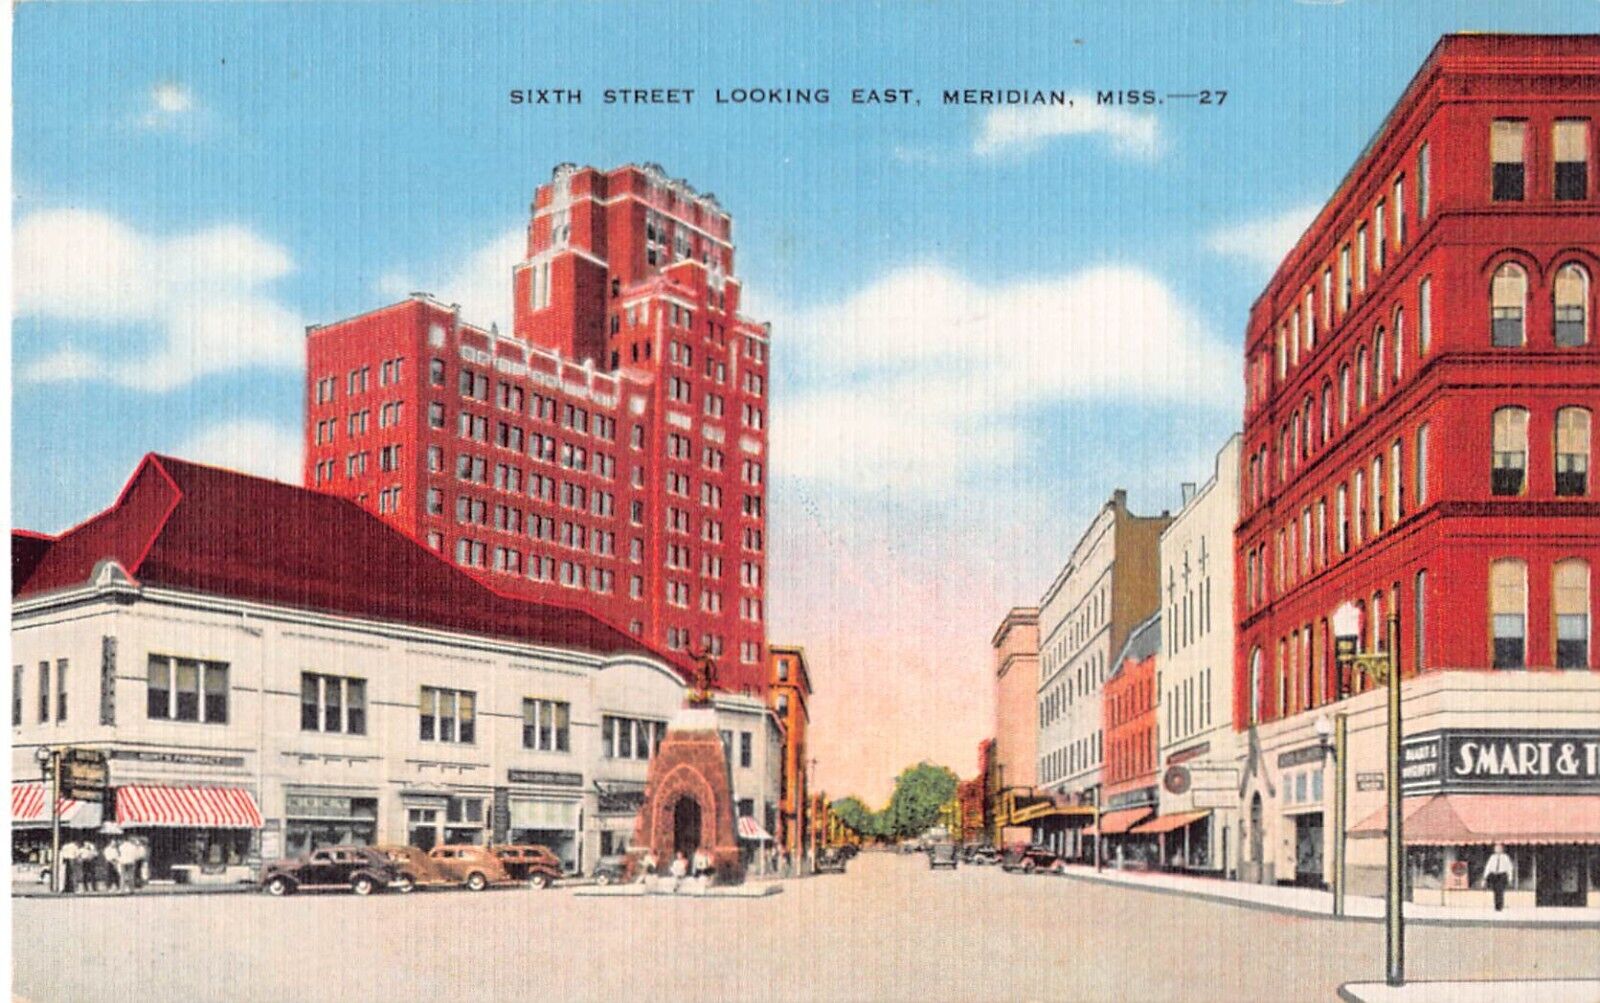 Businesses on Sixth Street Looking East, Meridian, Mississippi-Old Postcard